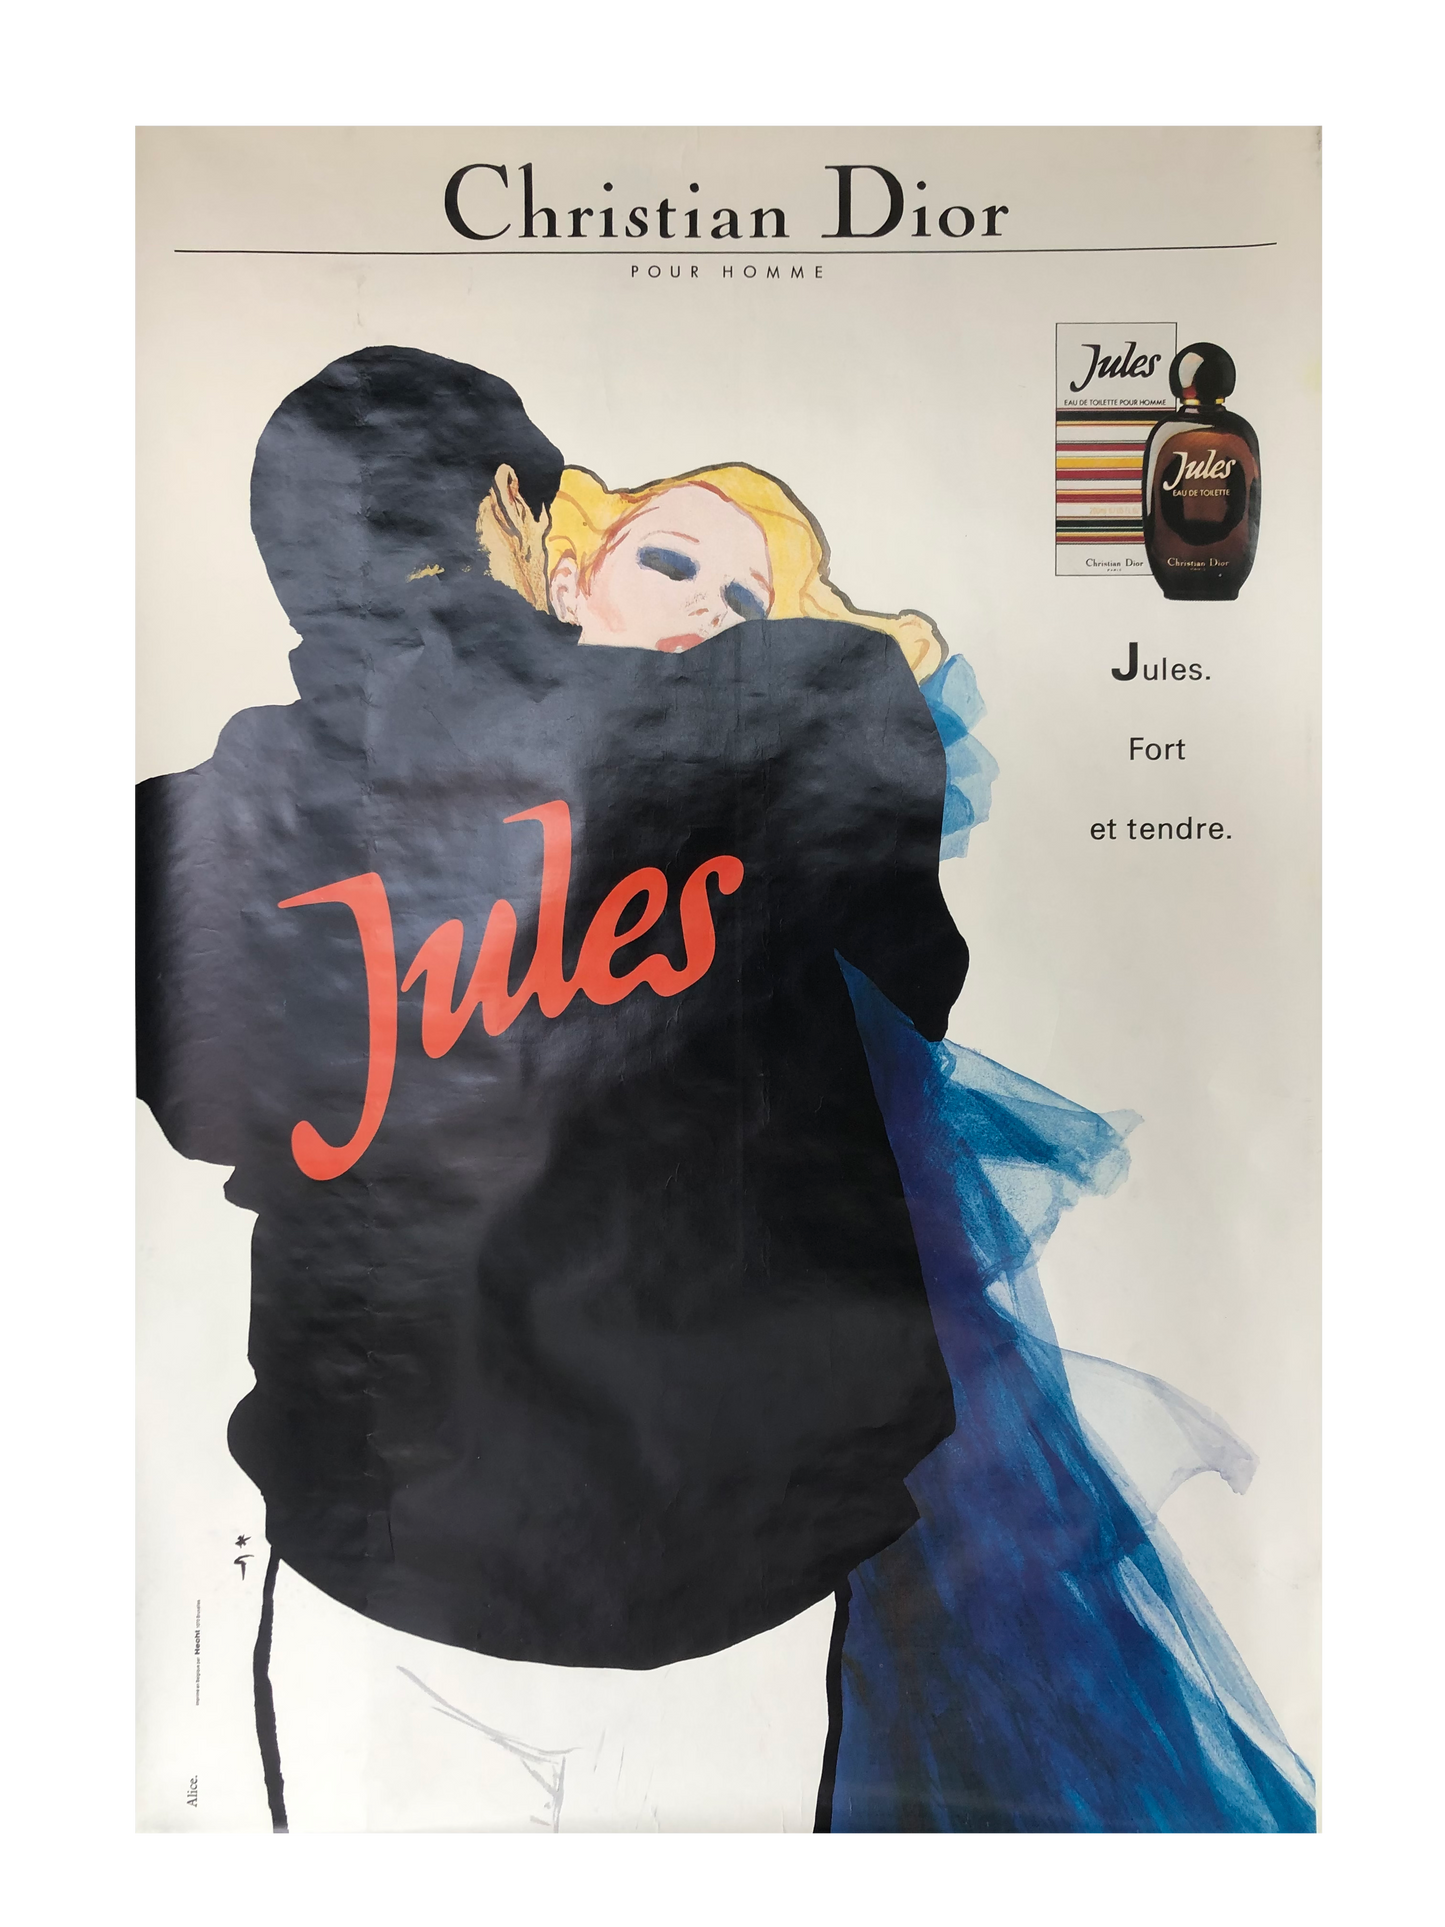 Christian Dior 'Jules' Fragrance Advertisement by Rene Gruau